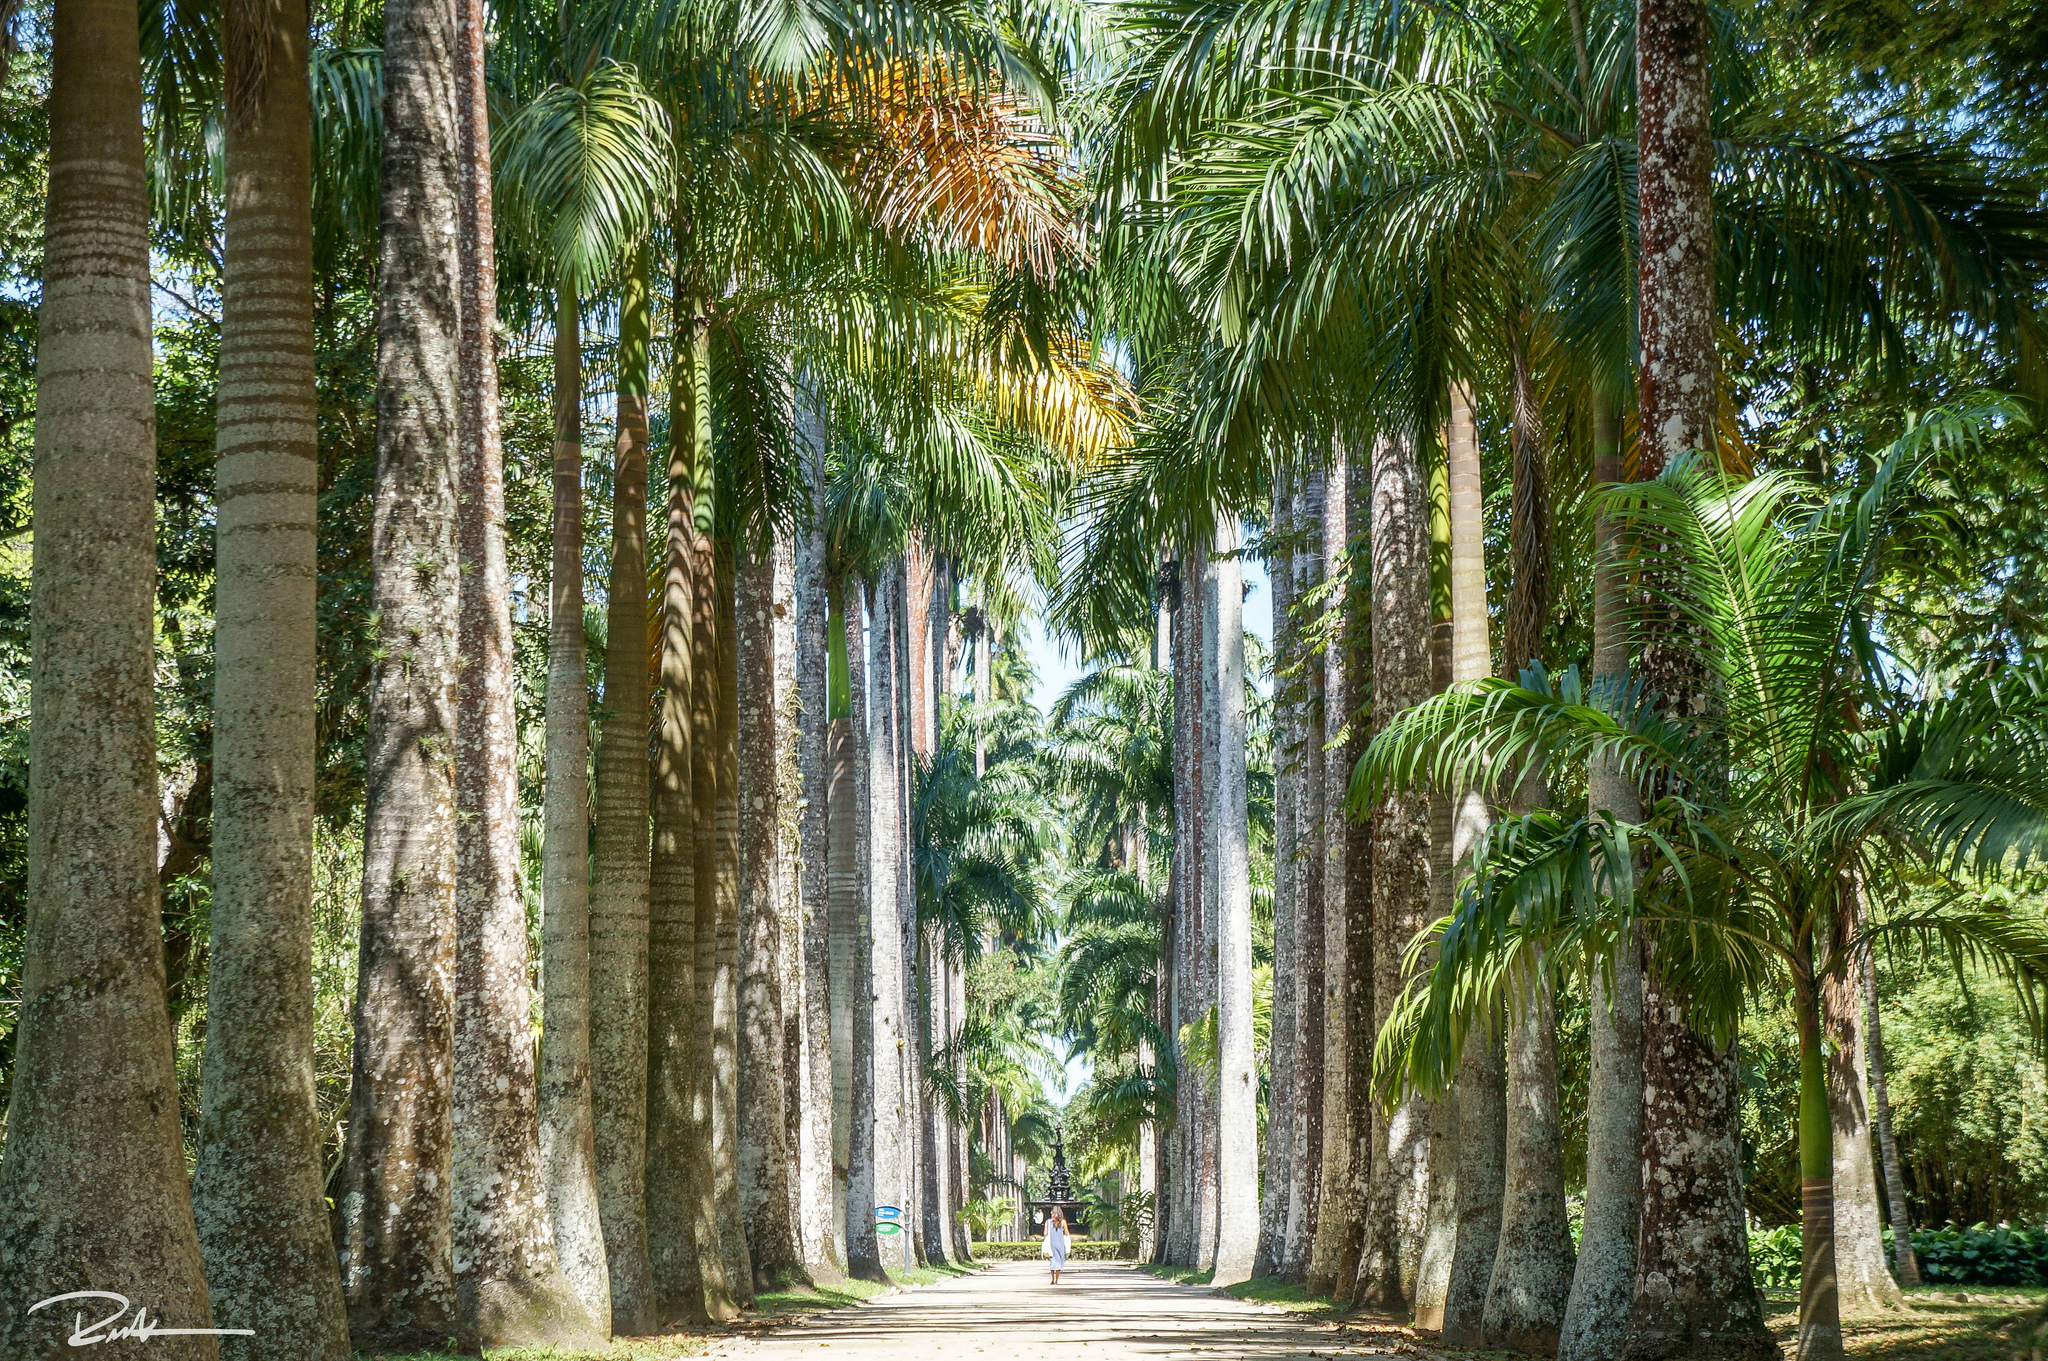 Jardim Botanico's main walkway